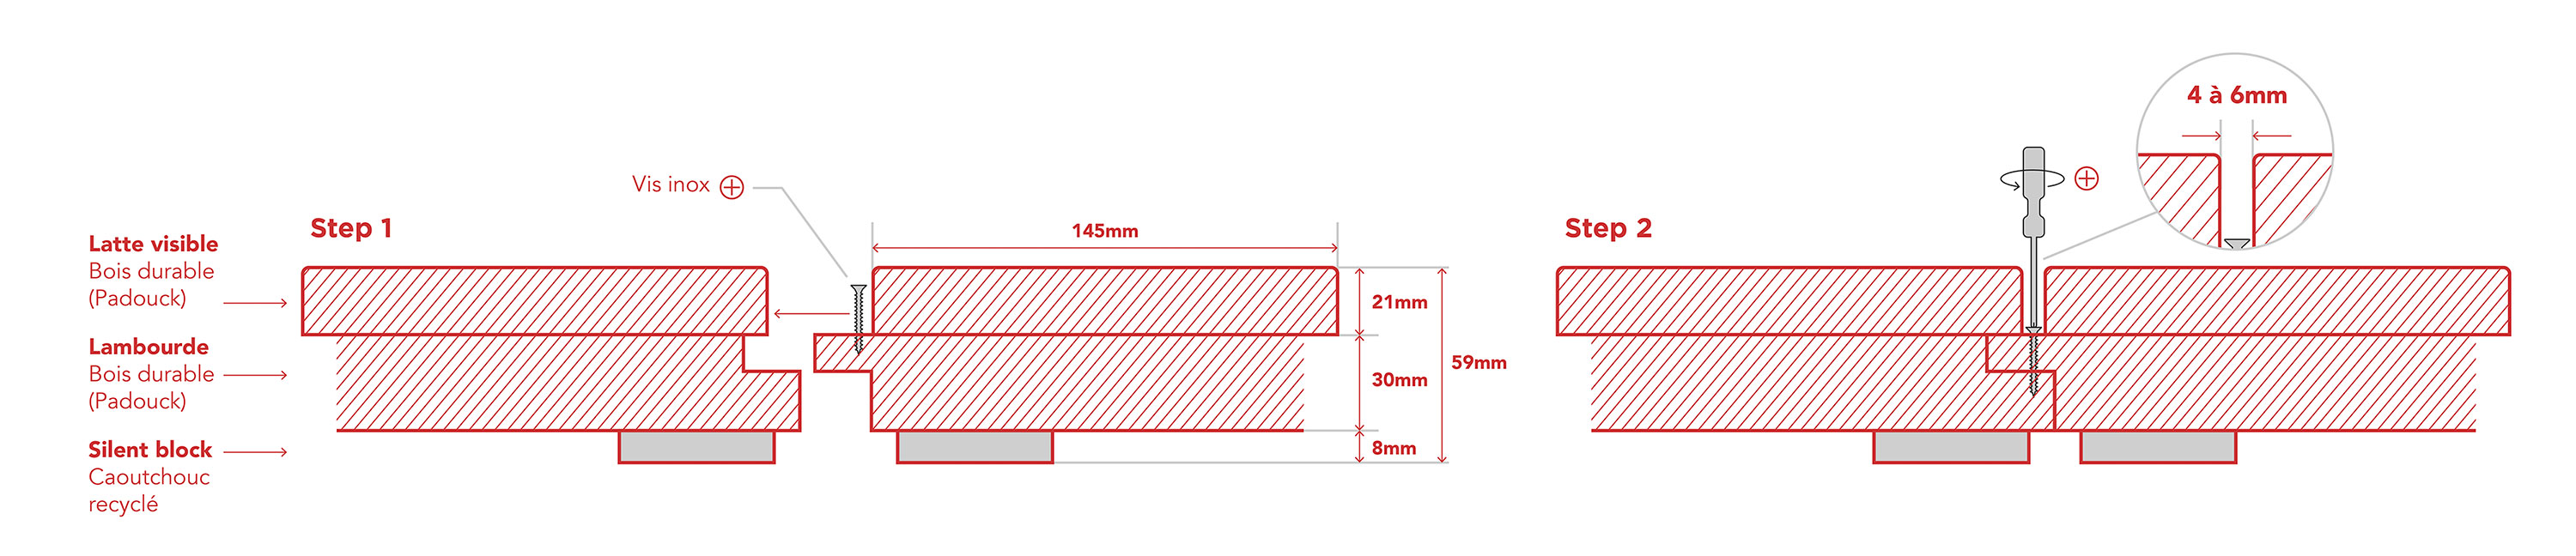 Plan technique des sols de balcon BalonEasy